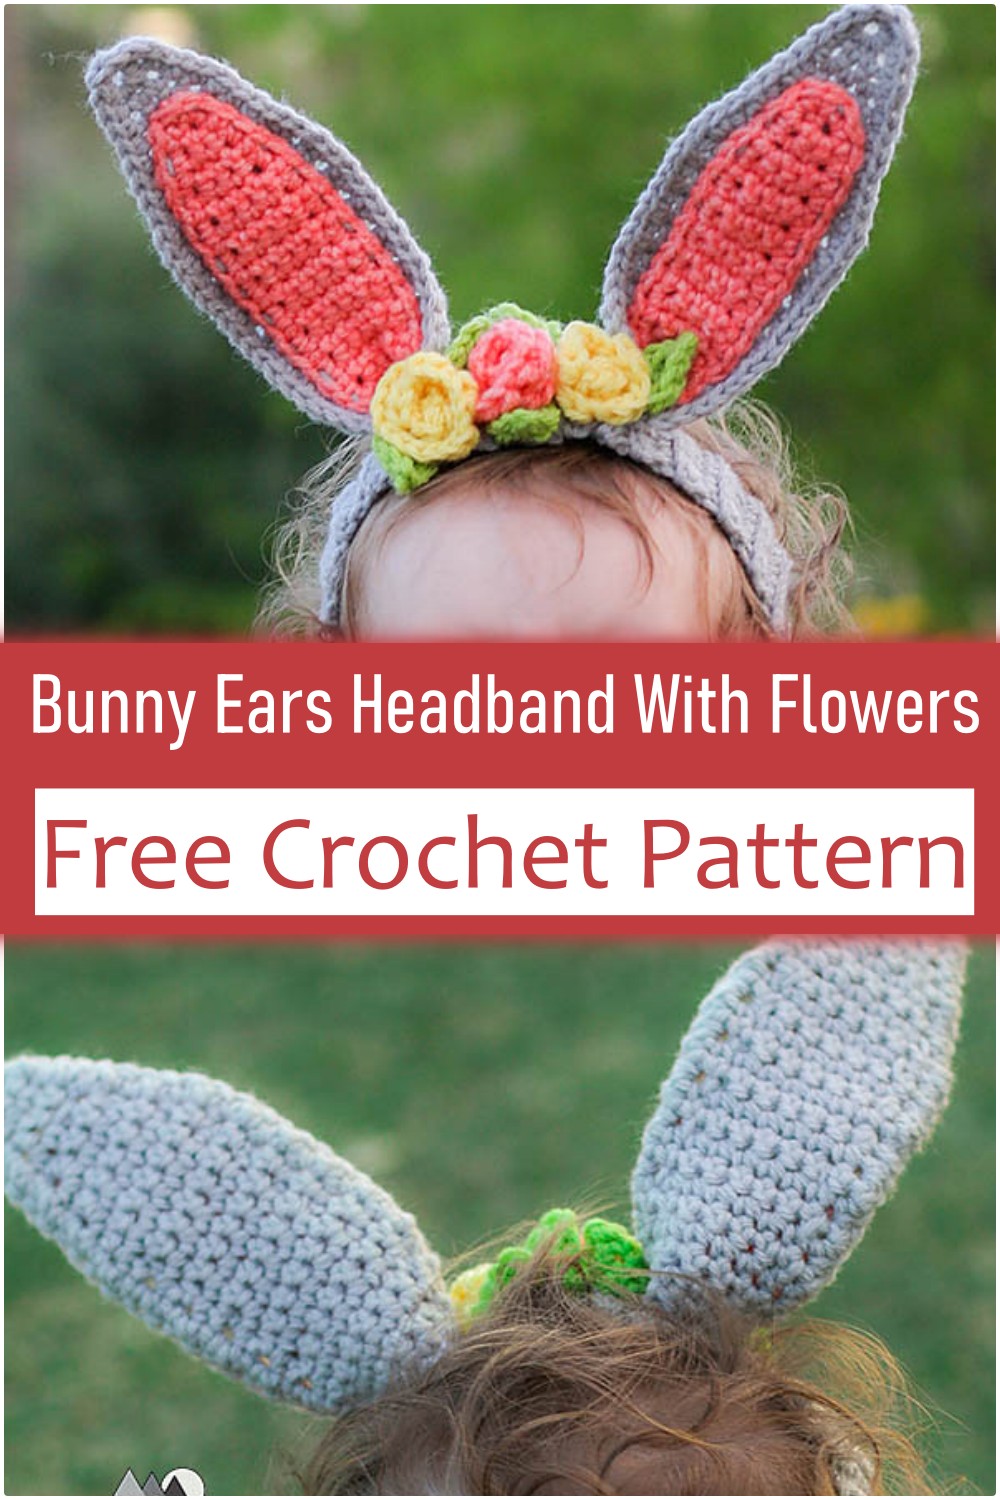 Crochet Bunny Ears Headband With Flowers